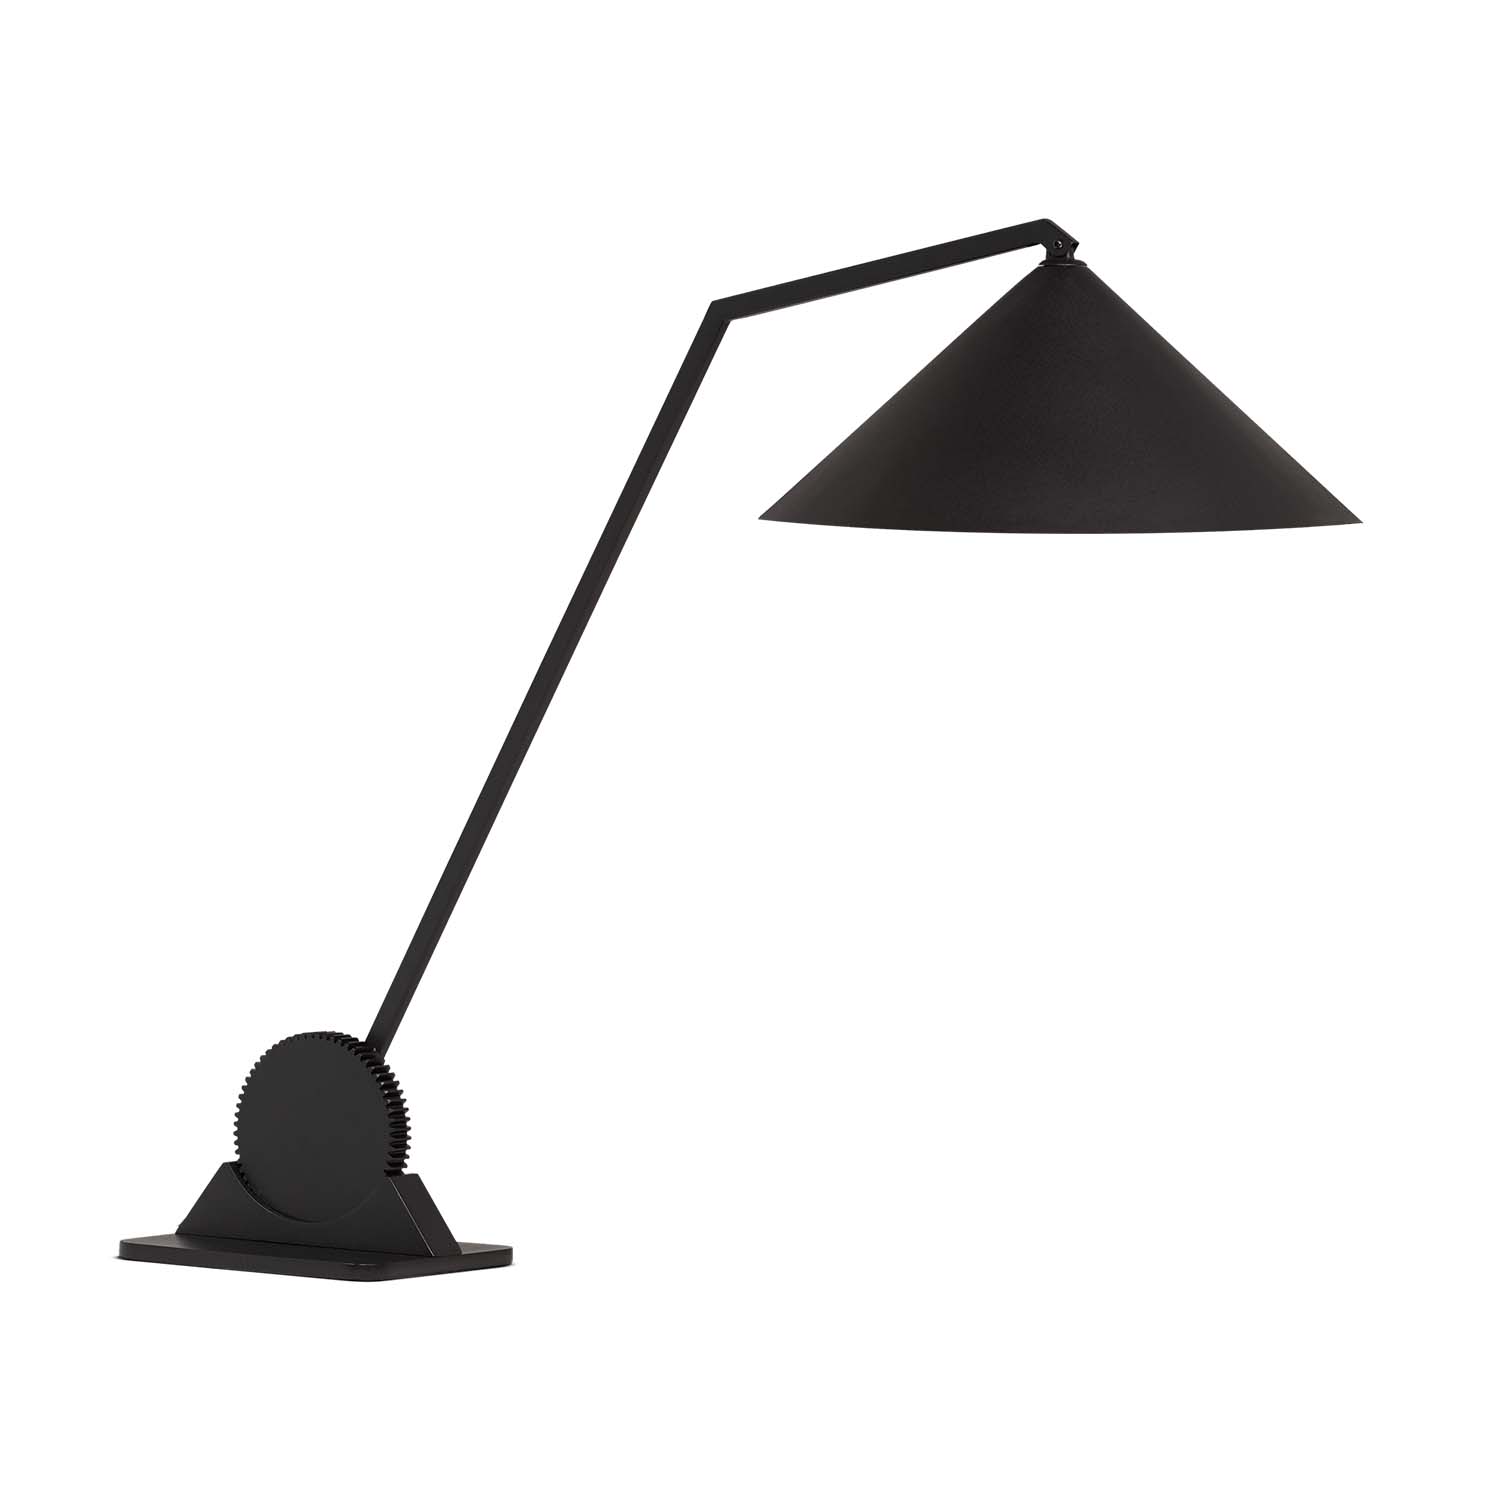 GEAR - Design and modern black desk lamp